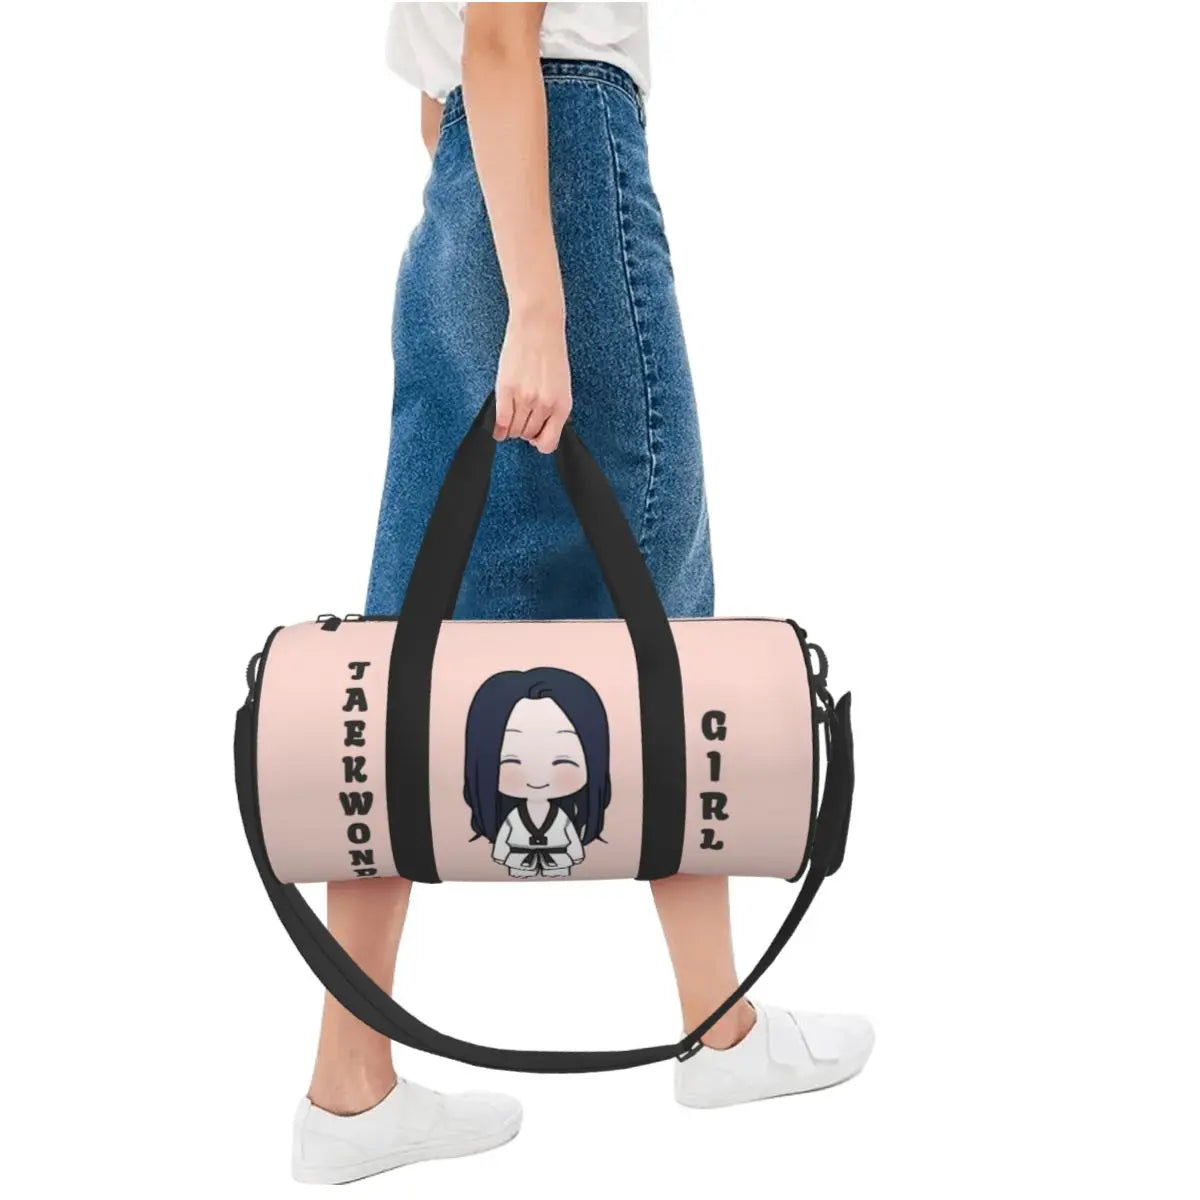 Kawaii Taekwondo Girl Duffle Bag